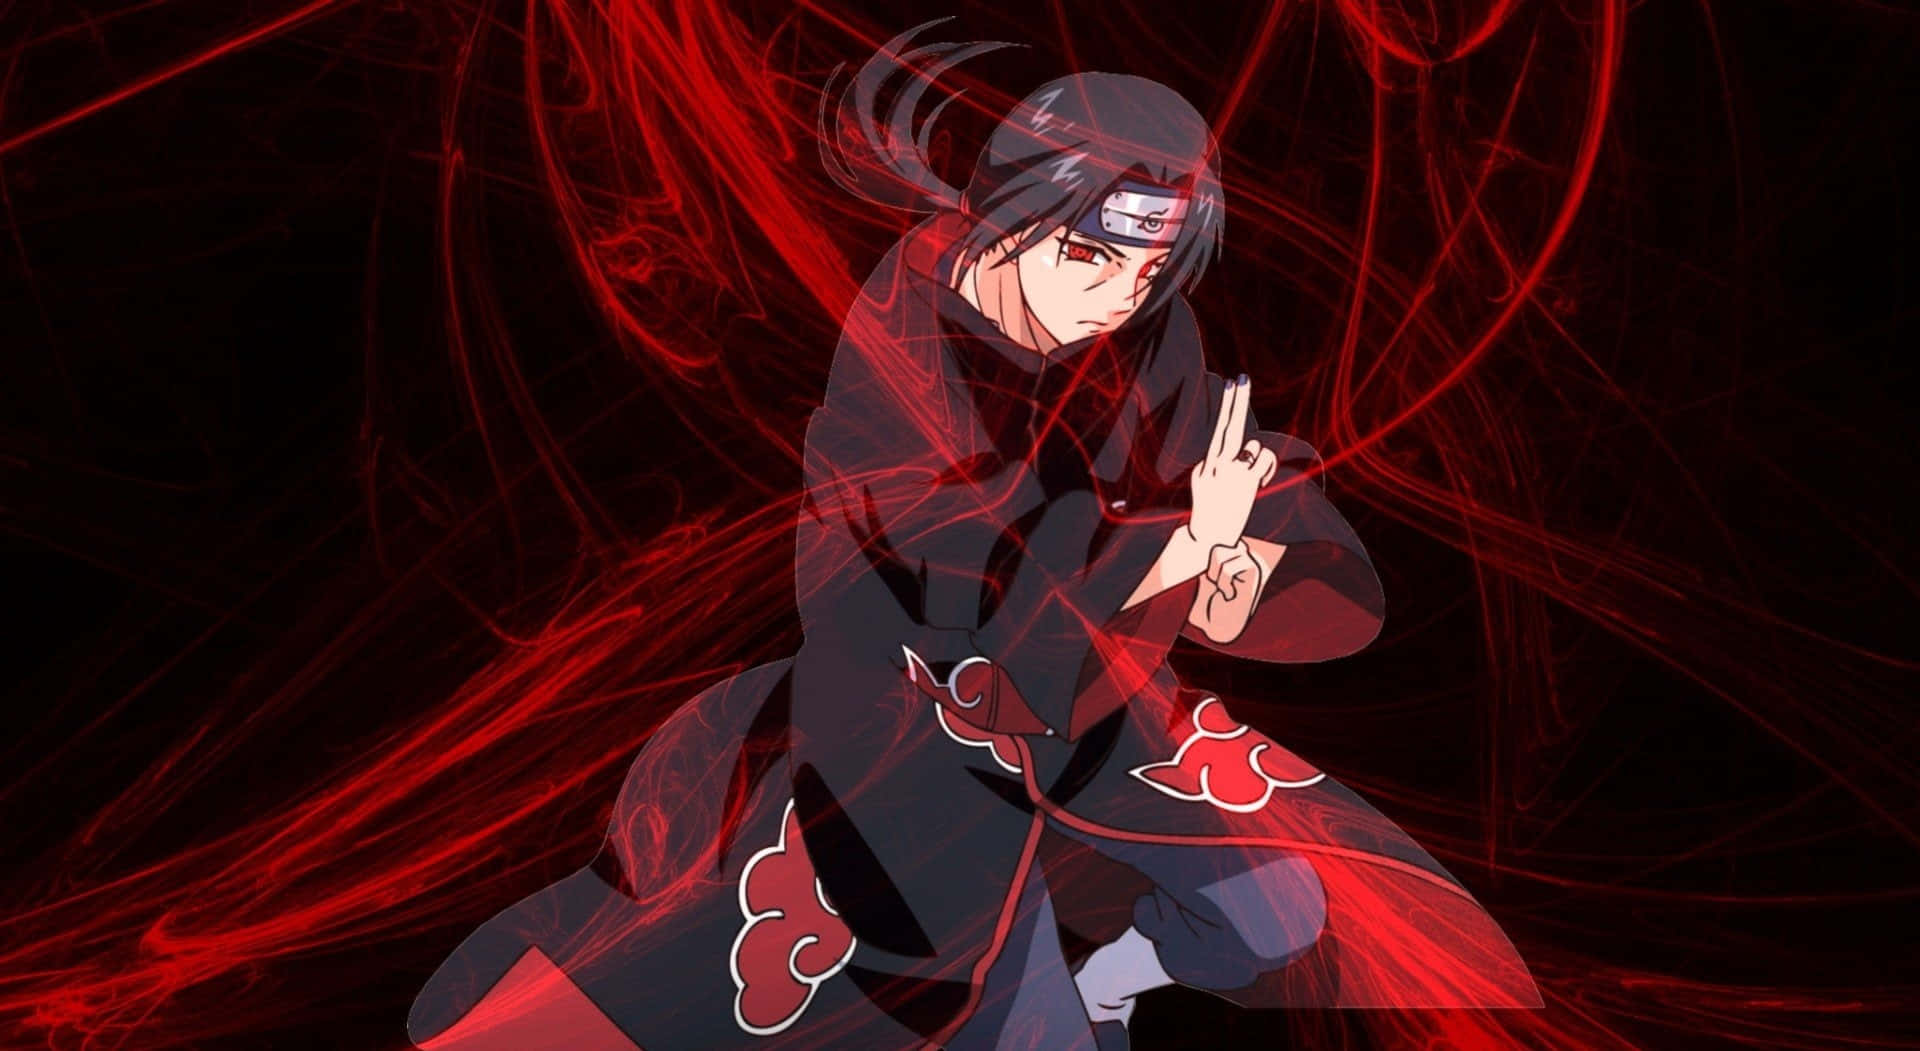 Akatsuki Ninja - The Masked Menace of the Hidden Leaf Village" Wallpaper